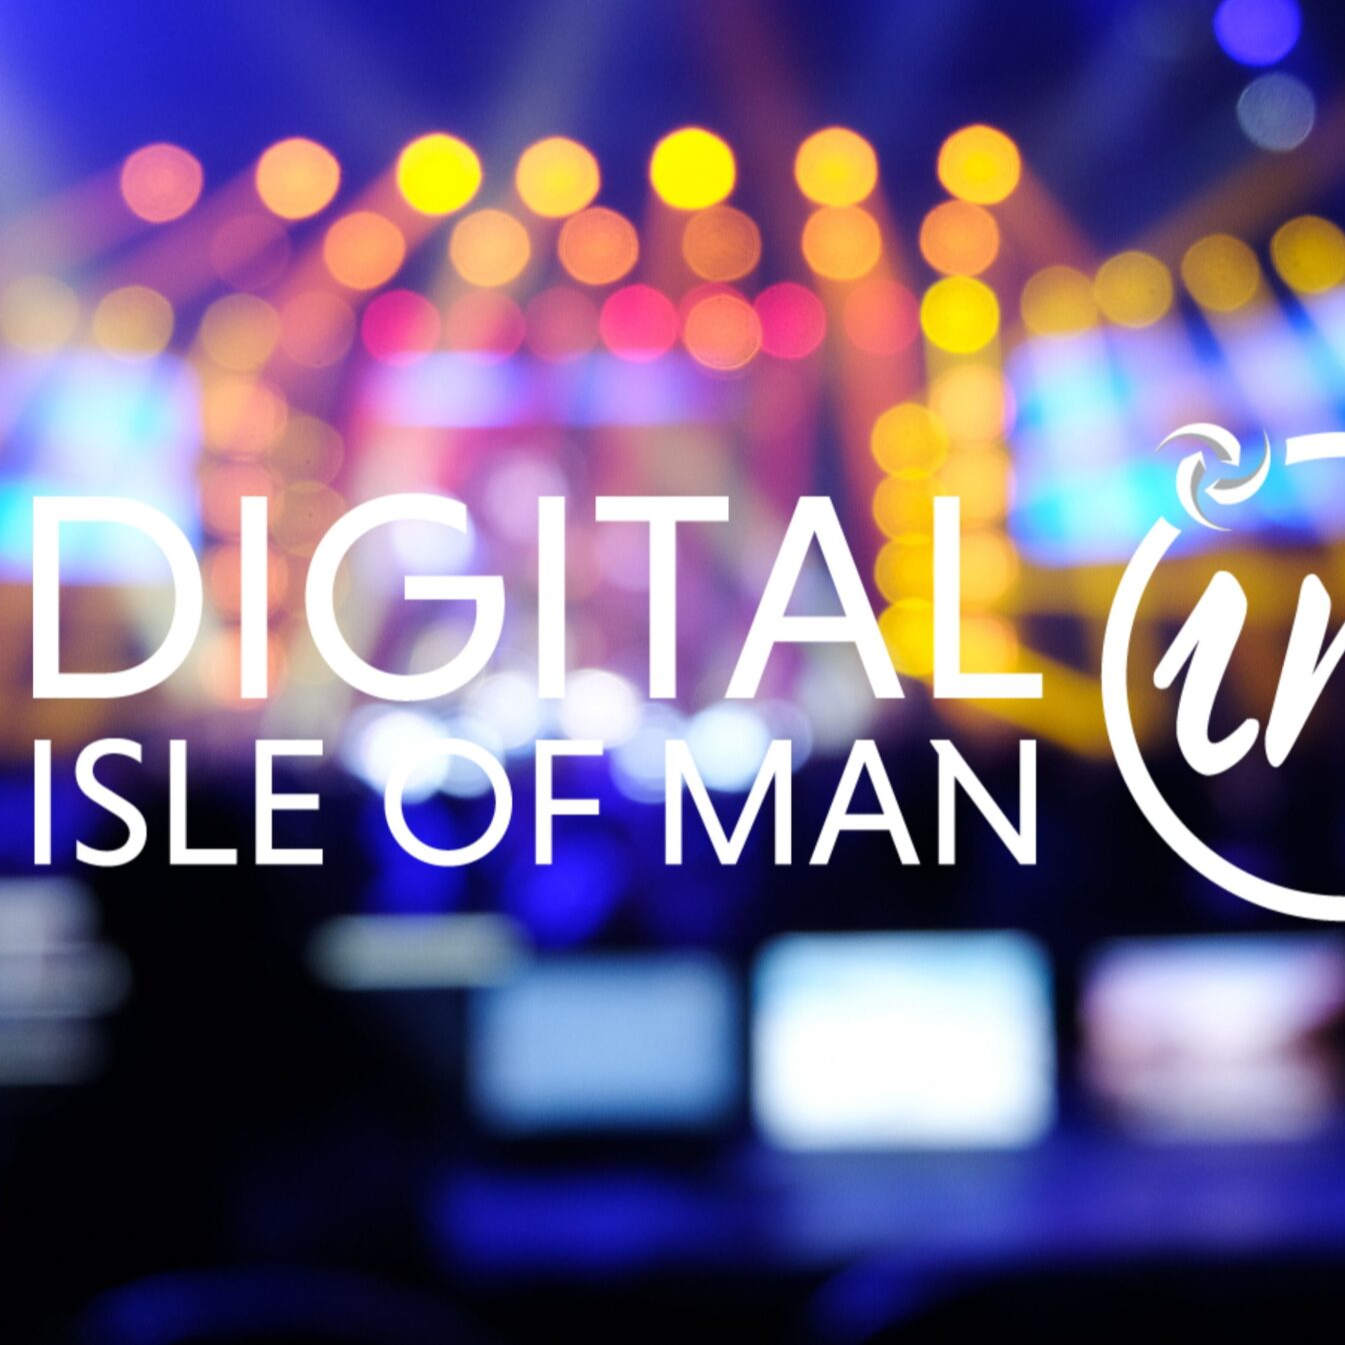 Digital Isle of Man Board Director (NED)